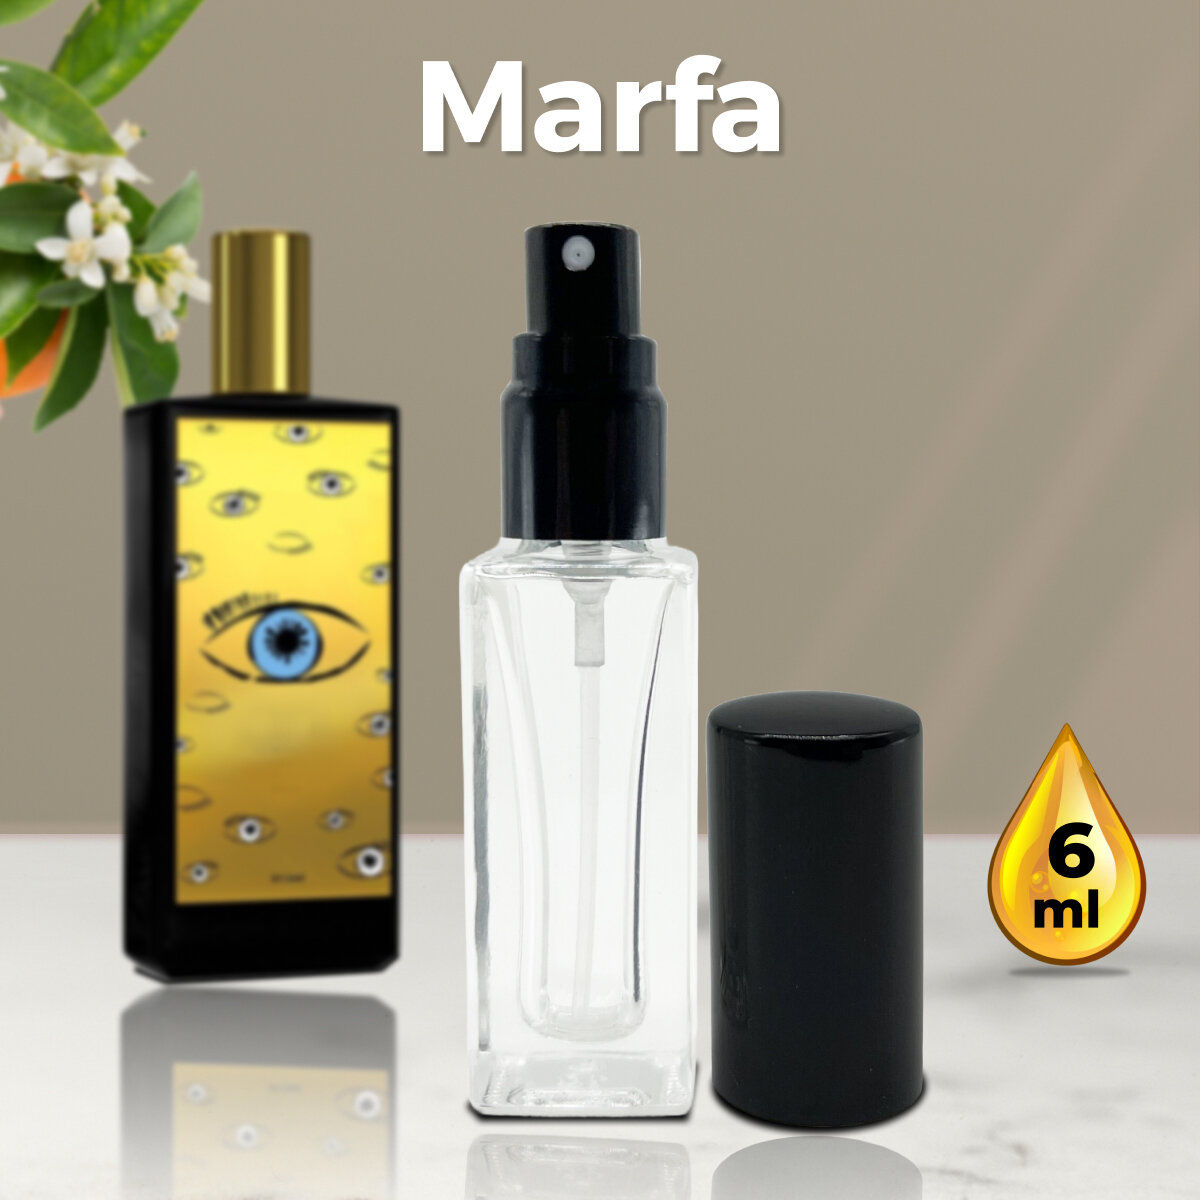 "Marfa" - Духи унисекс 6 мл + подарок 1 мл другого аромата